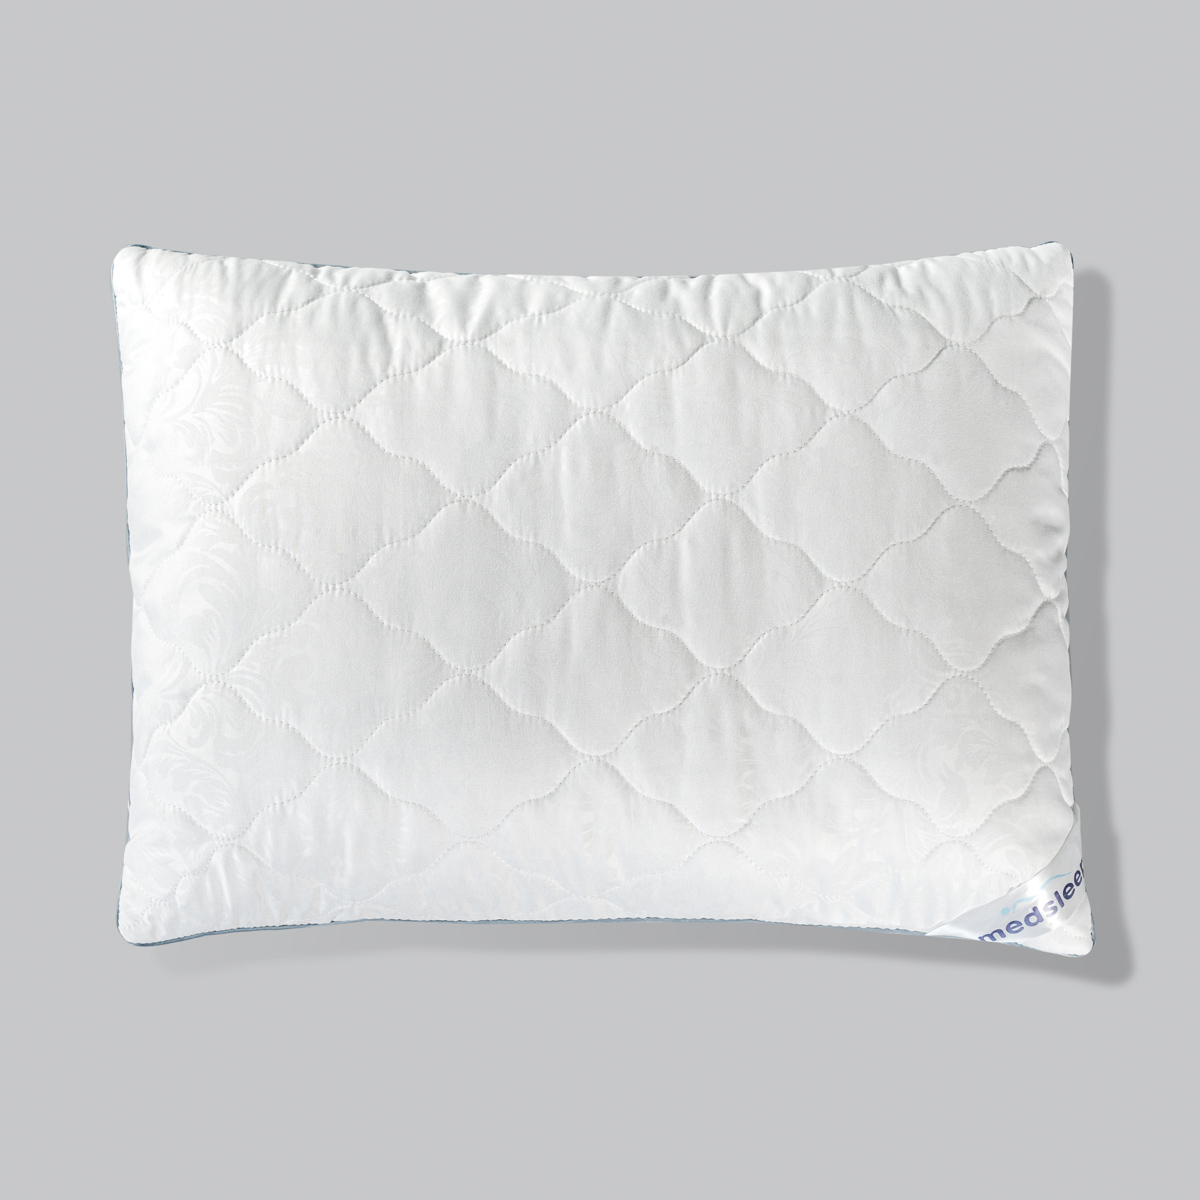 Подушка Medsleep Нотари белая 50х70 см, цвет белый - фото 1